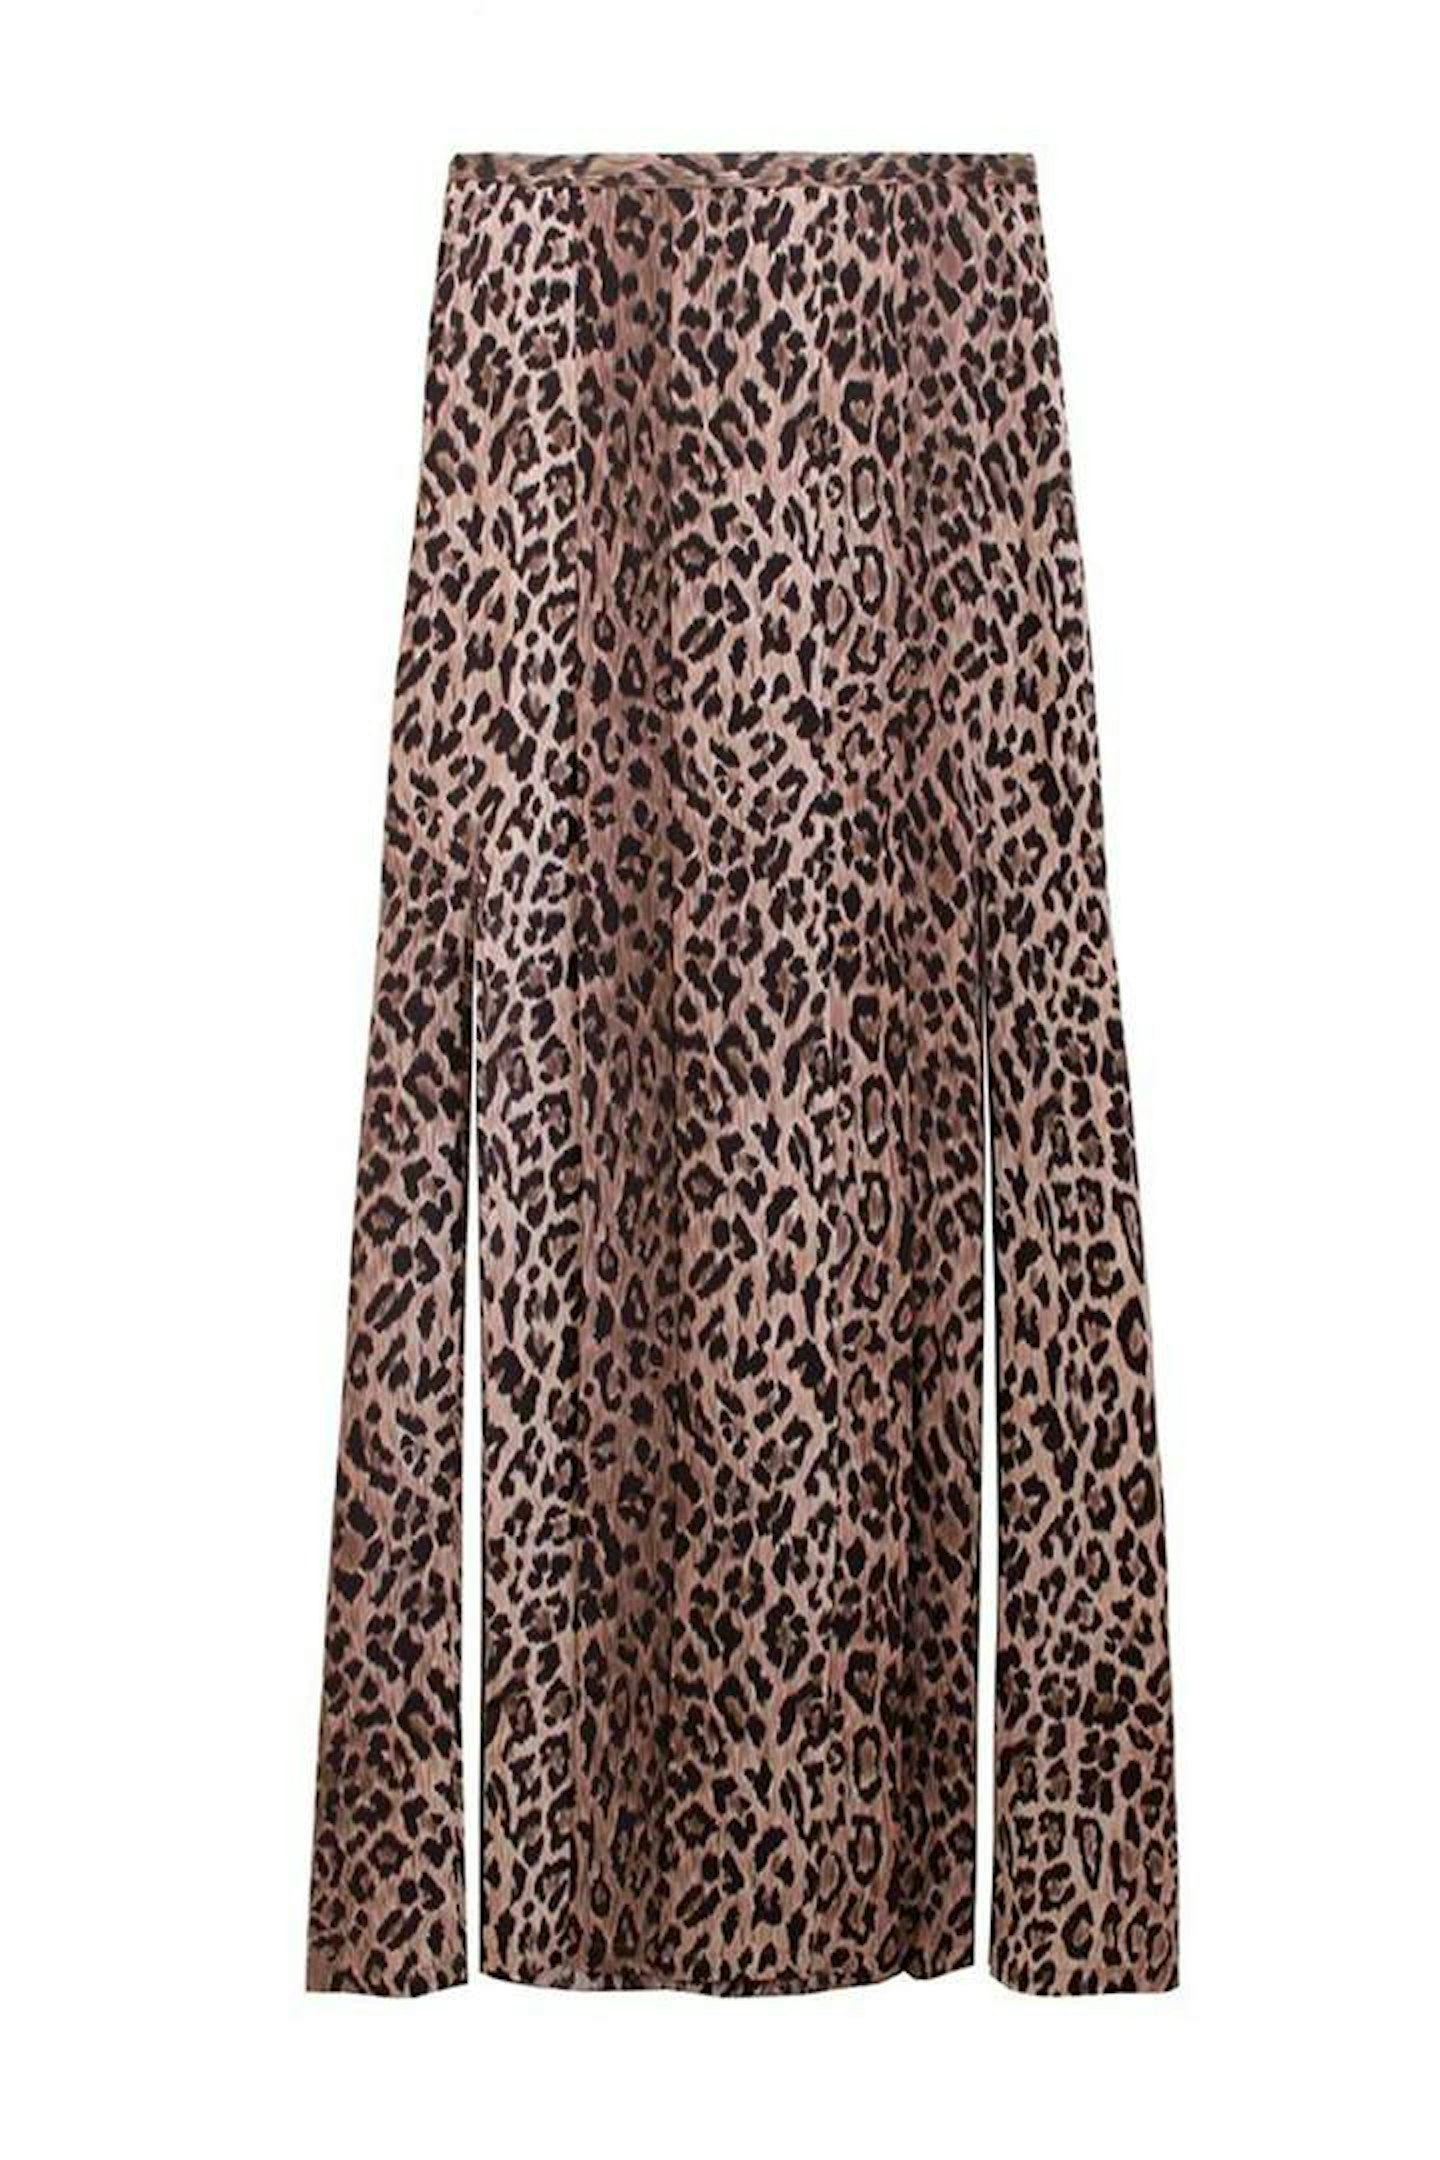 Rixo, Leopard Print Midi Skirt, £215